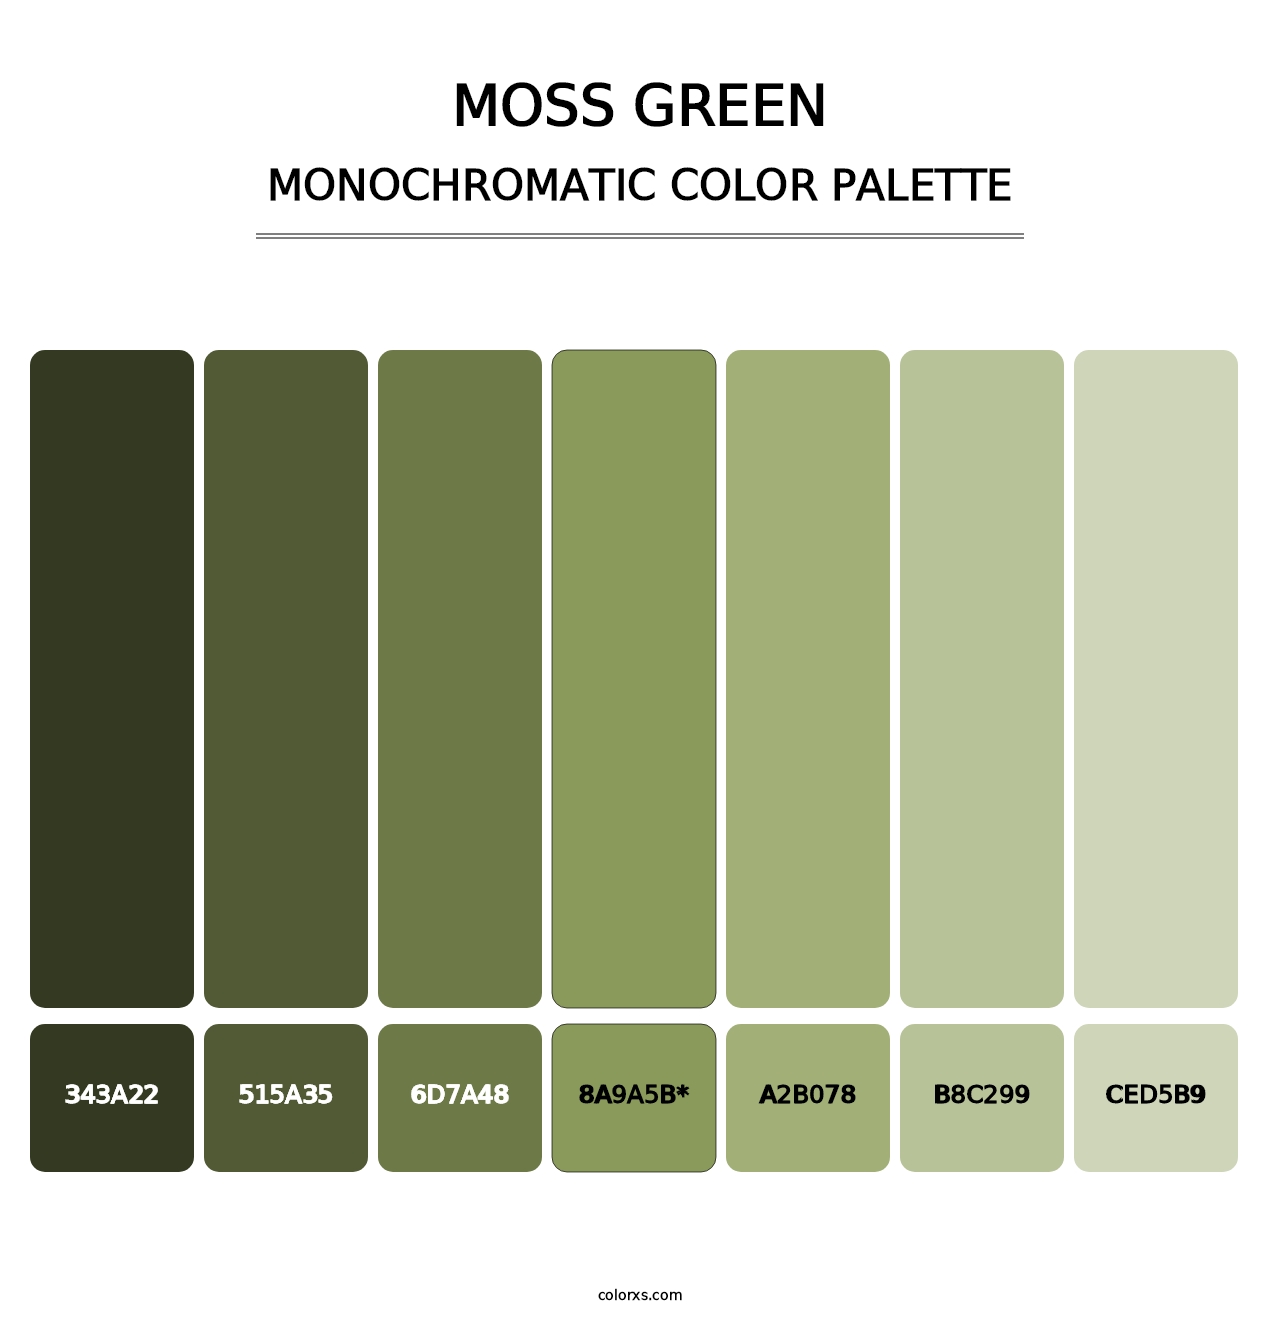 Moss Green - Monochromatic Color Palette